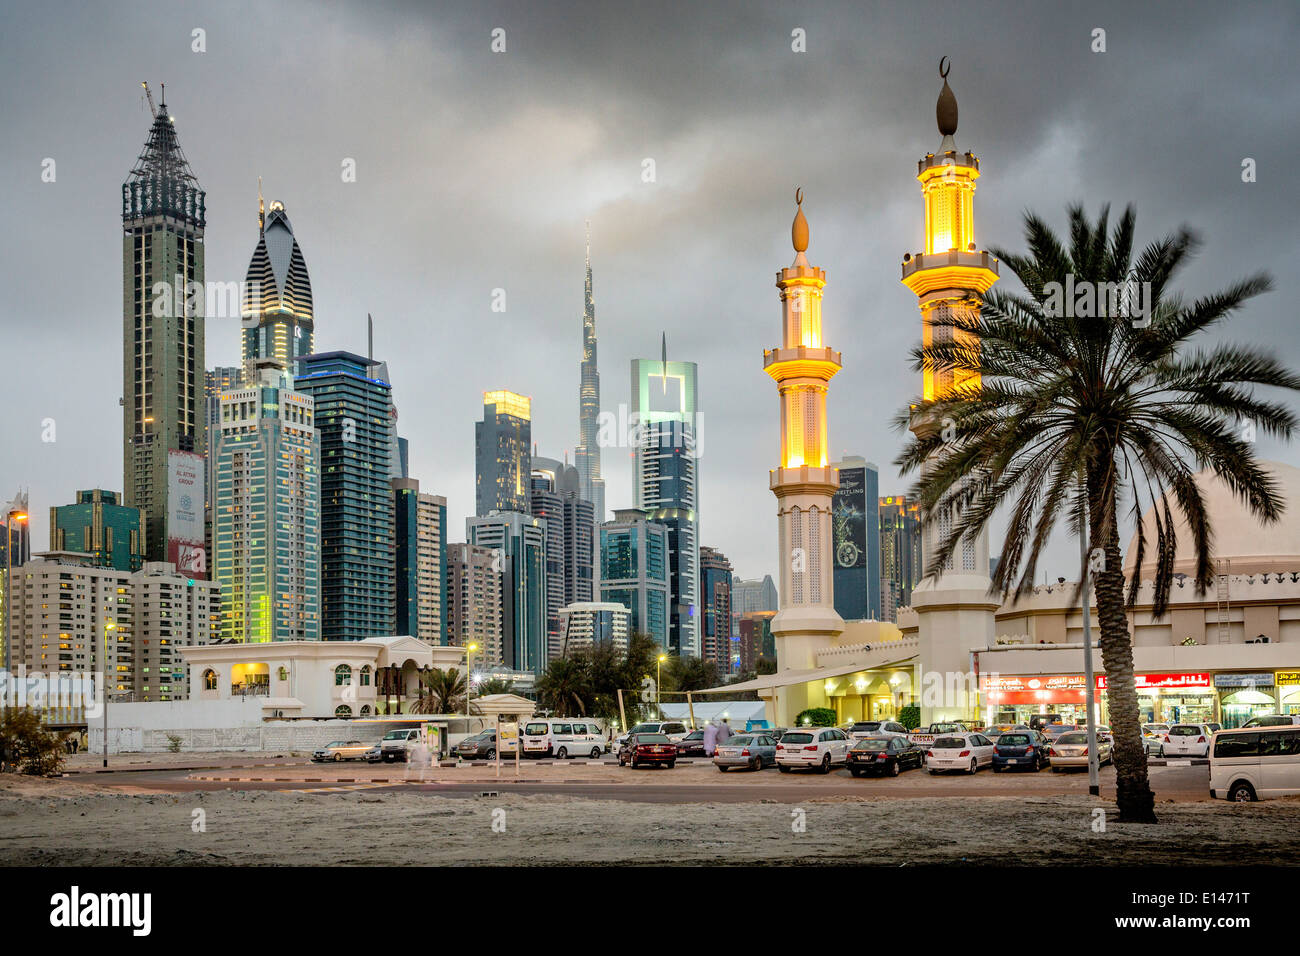 United Arab Emirates, Dubai, Financial city center skyline with Burj Khalifa, highest building in the world. Mosque. Twilight Stock Photo